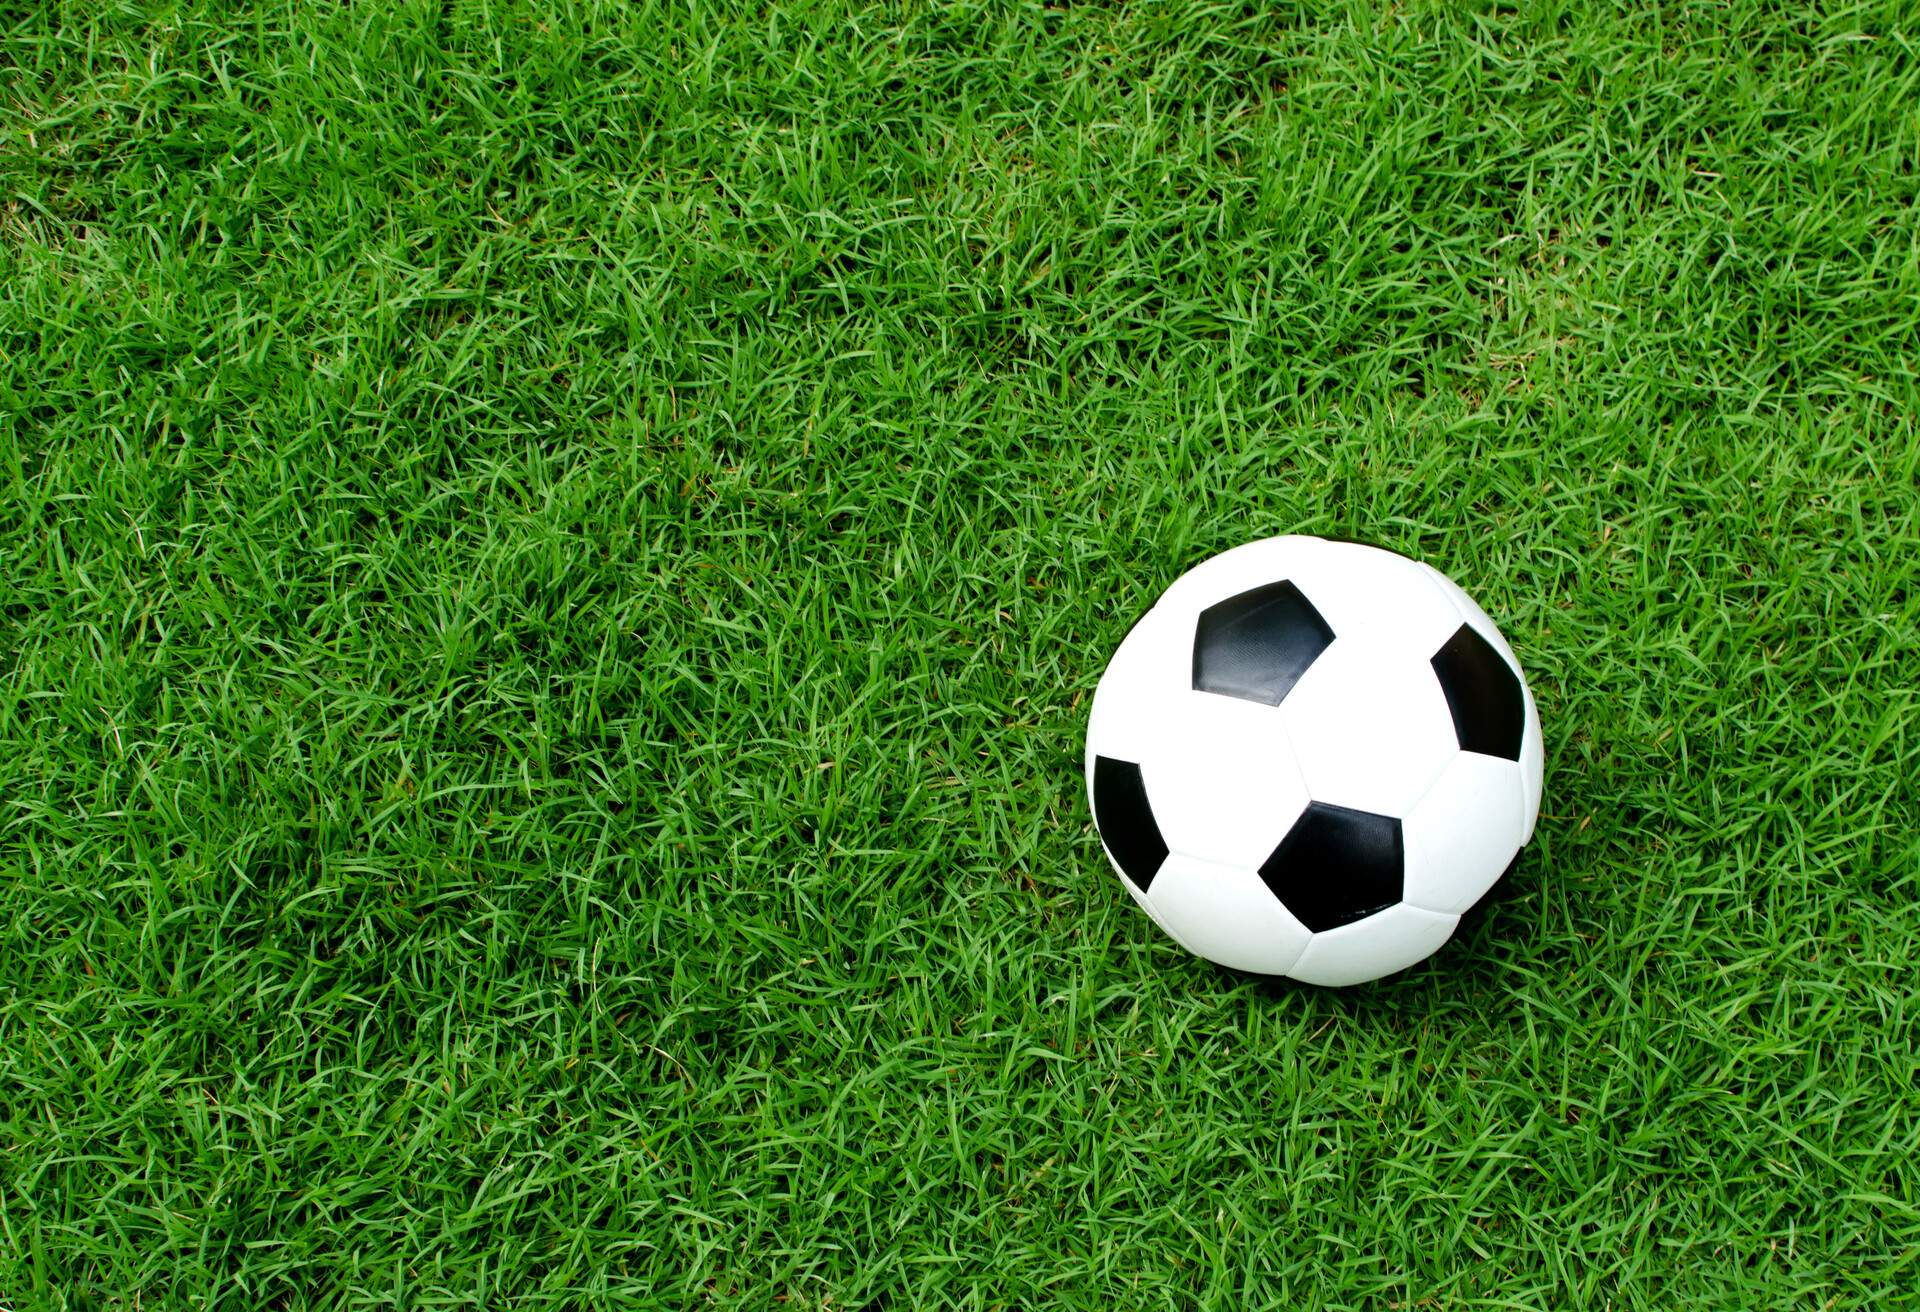 A soccer ball on a green field.